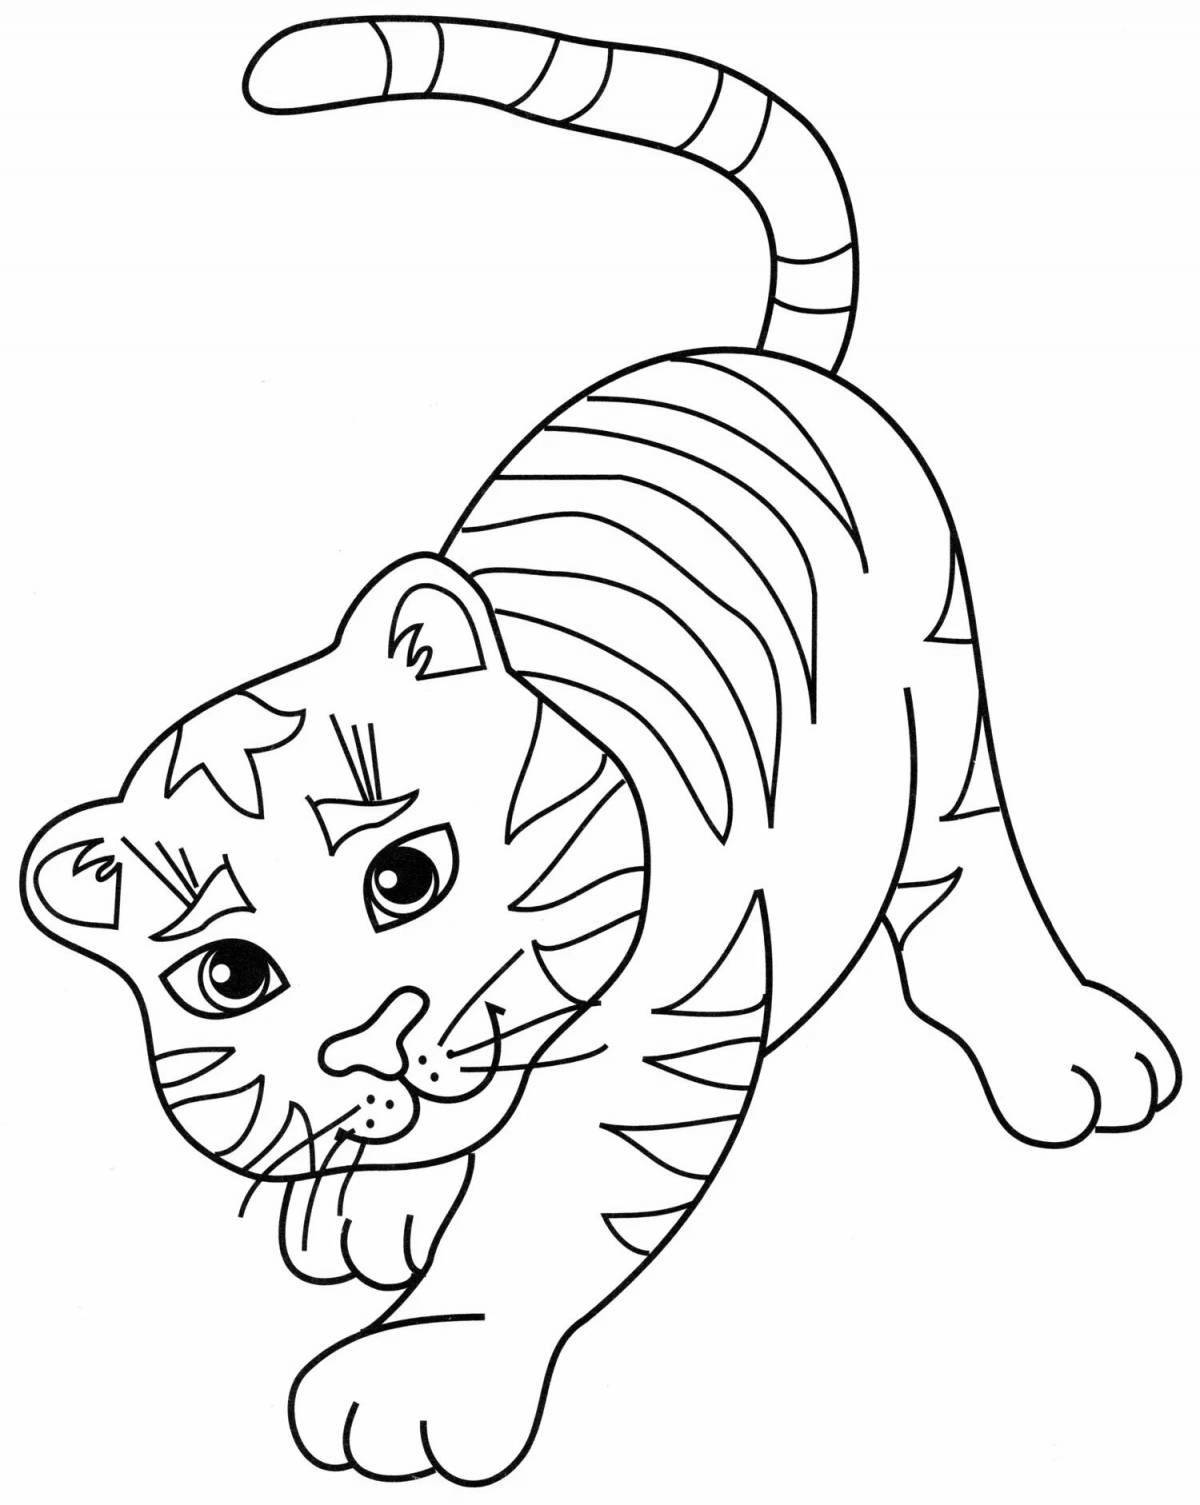 Ferocious tiger coloring page